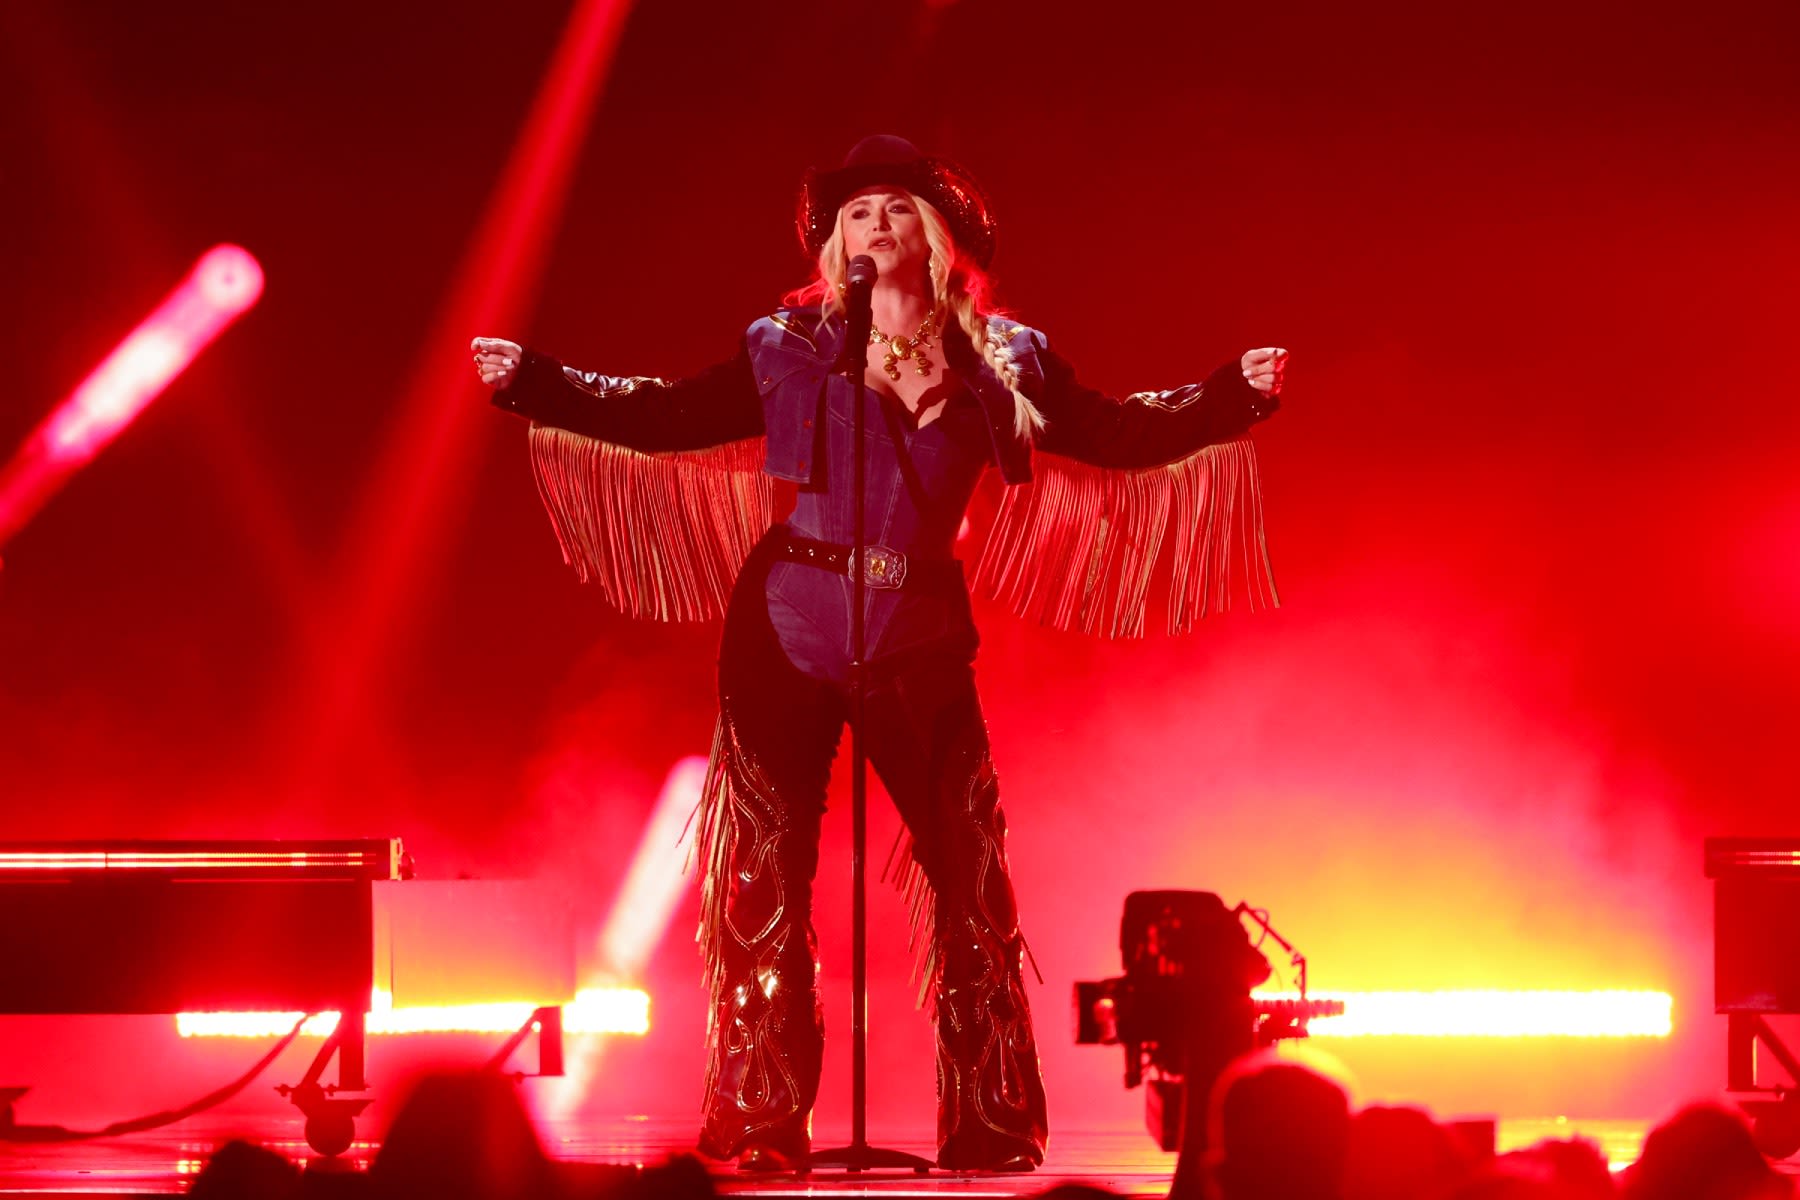 Miranda Lambert Performs New Single ‘Wranglers’ at ACM Awards